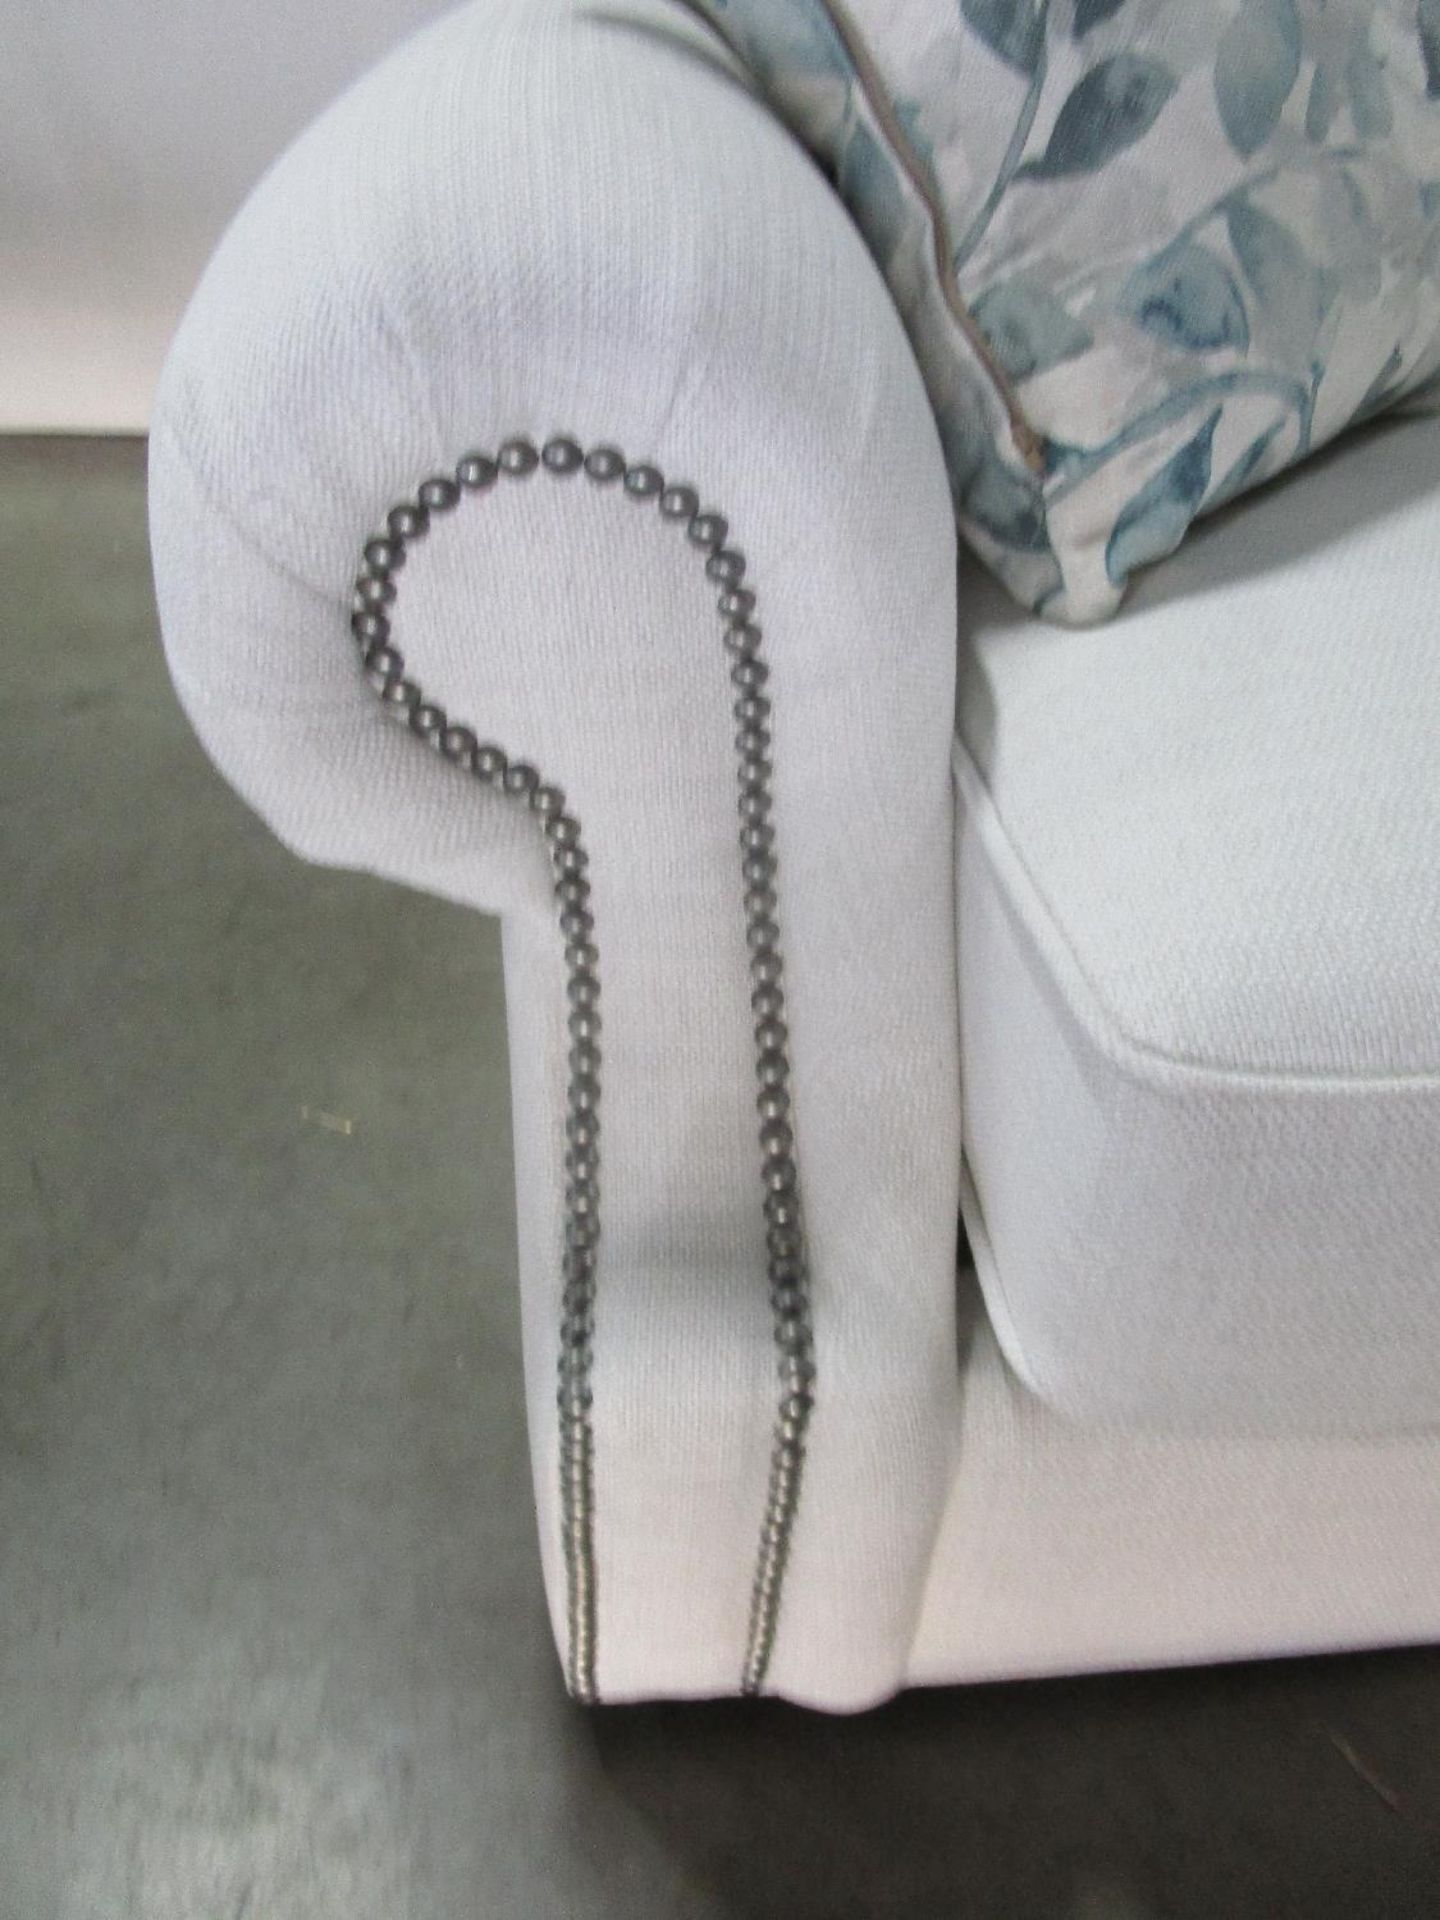 Flexsteel Sofa with Fabric Upholstery - Image 3 of 3